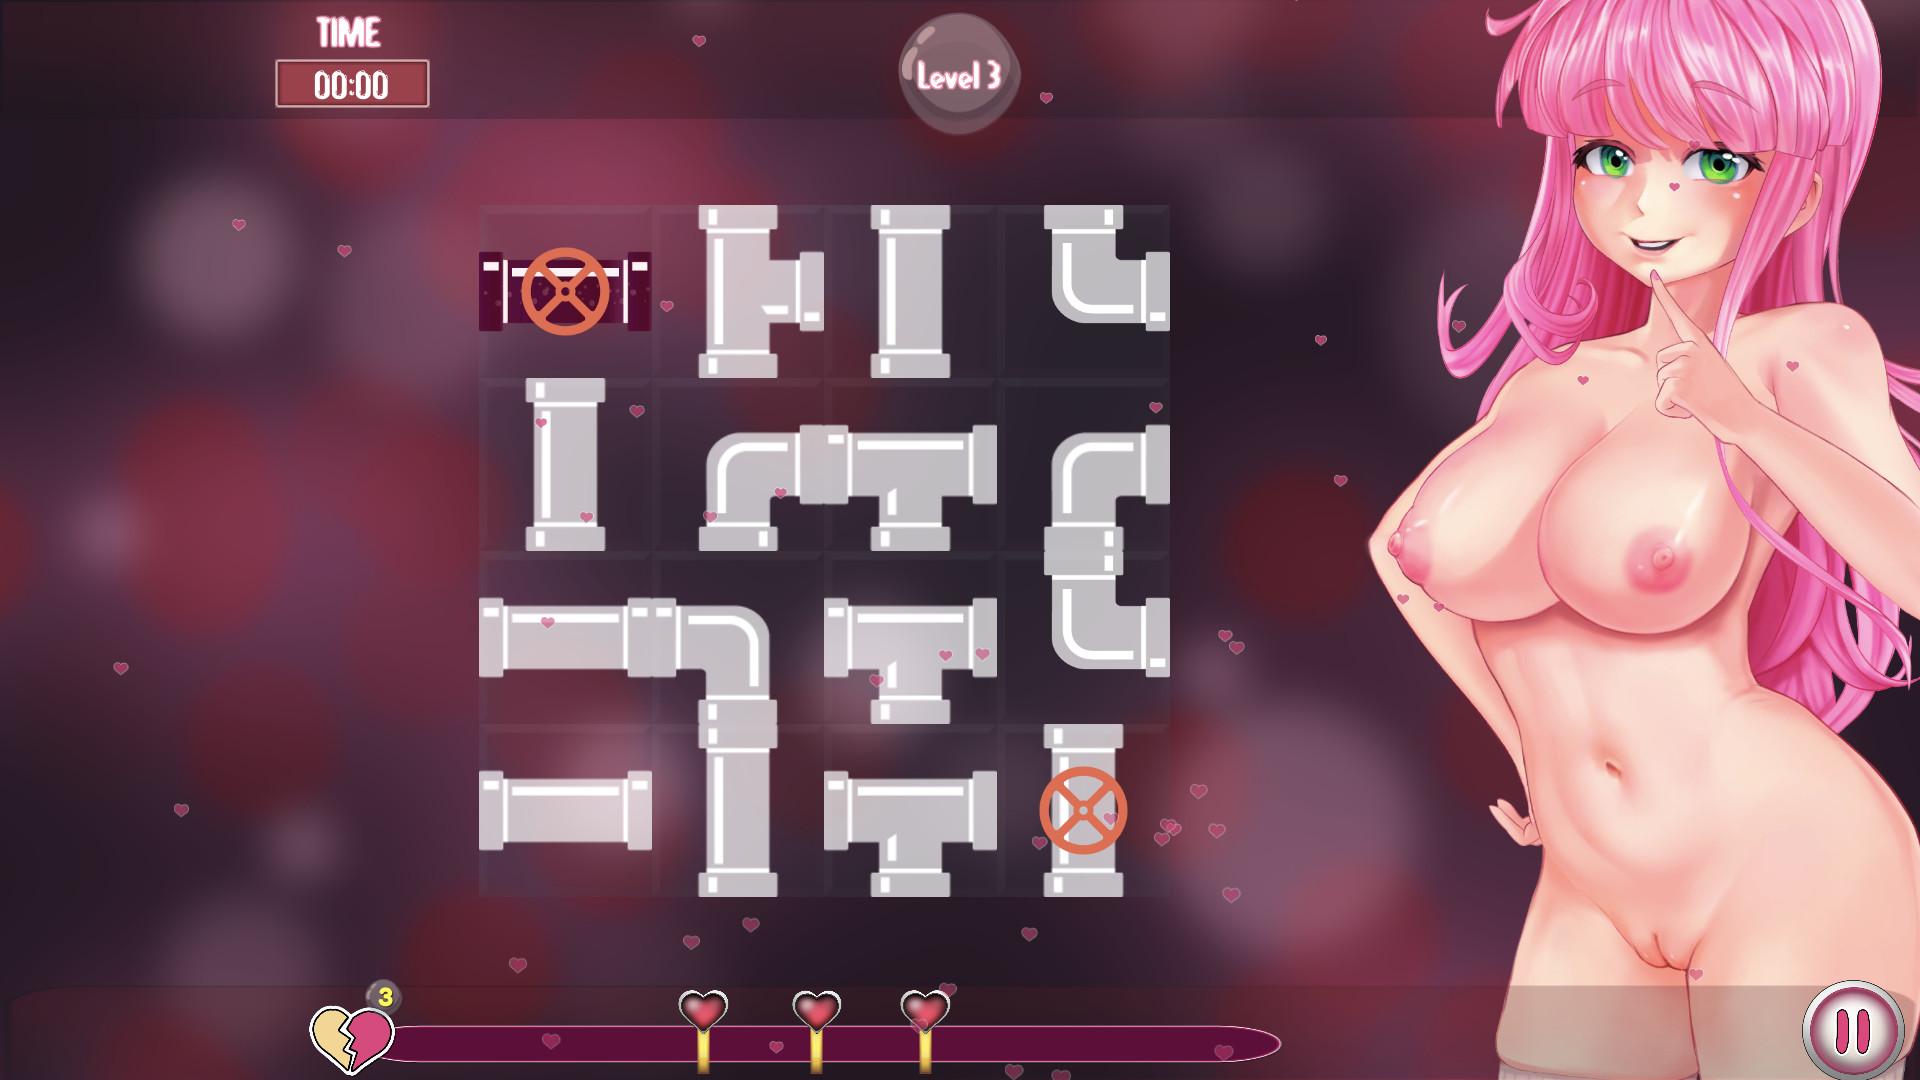 Screenshot №1 from game Waifu Secret